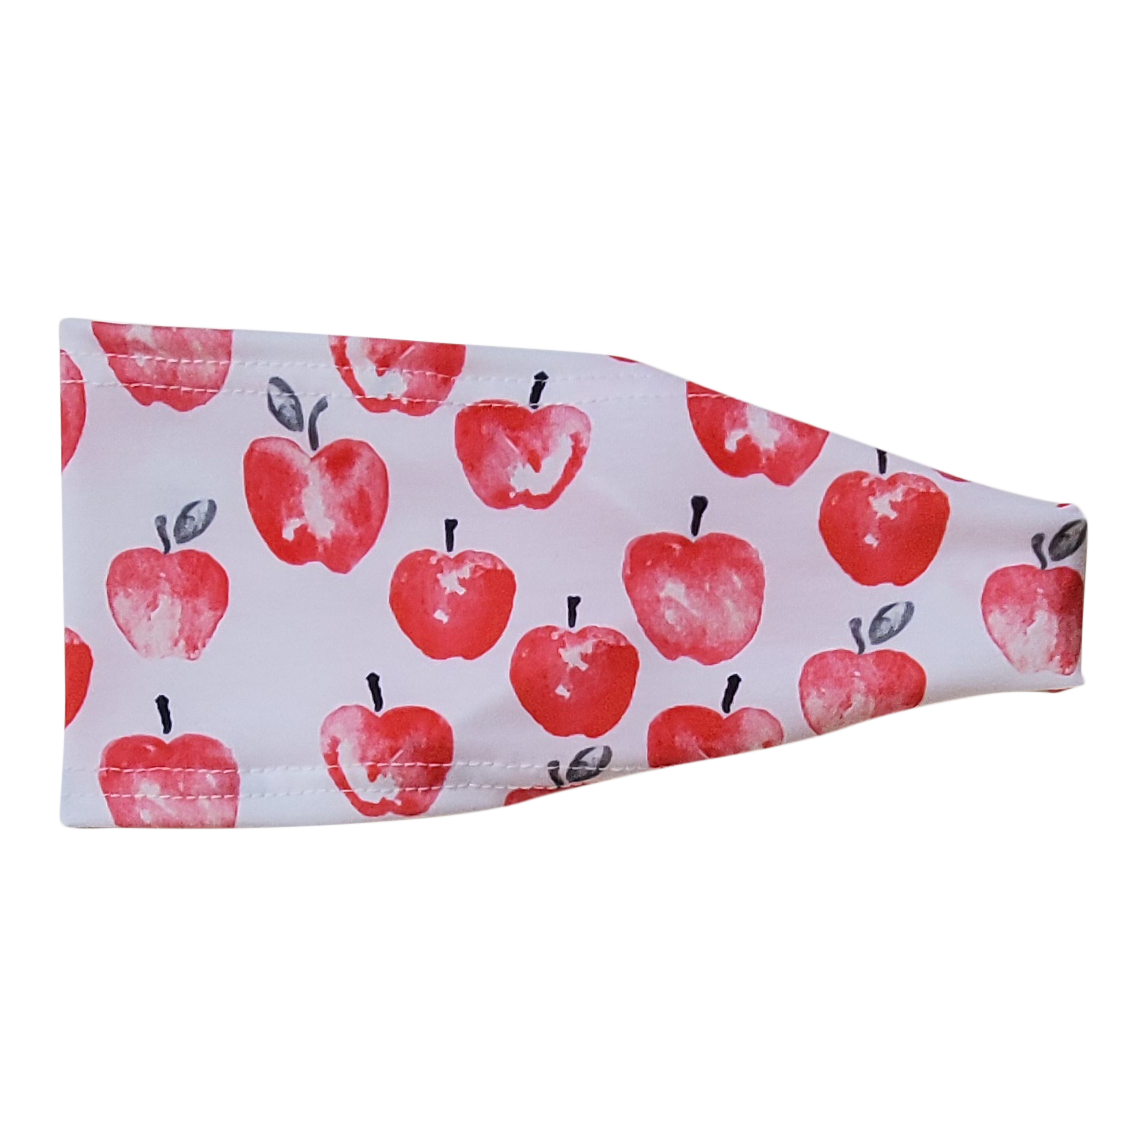 red apples on white fabric headband